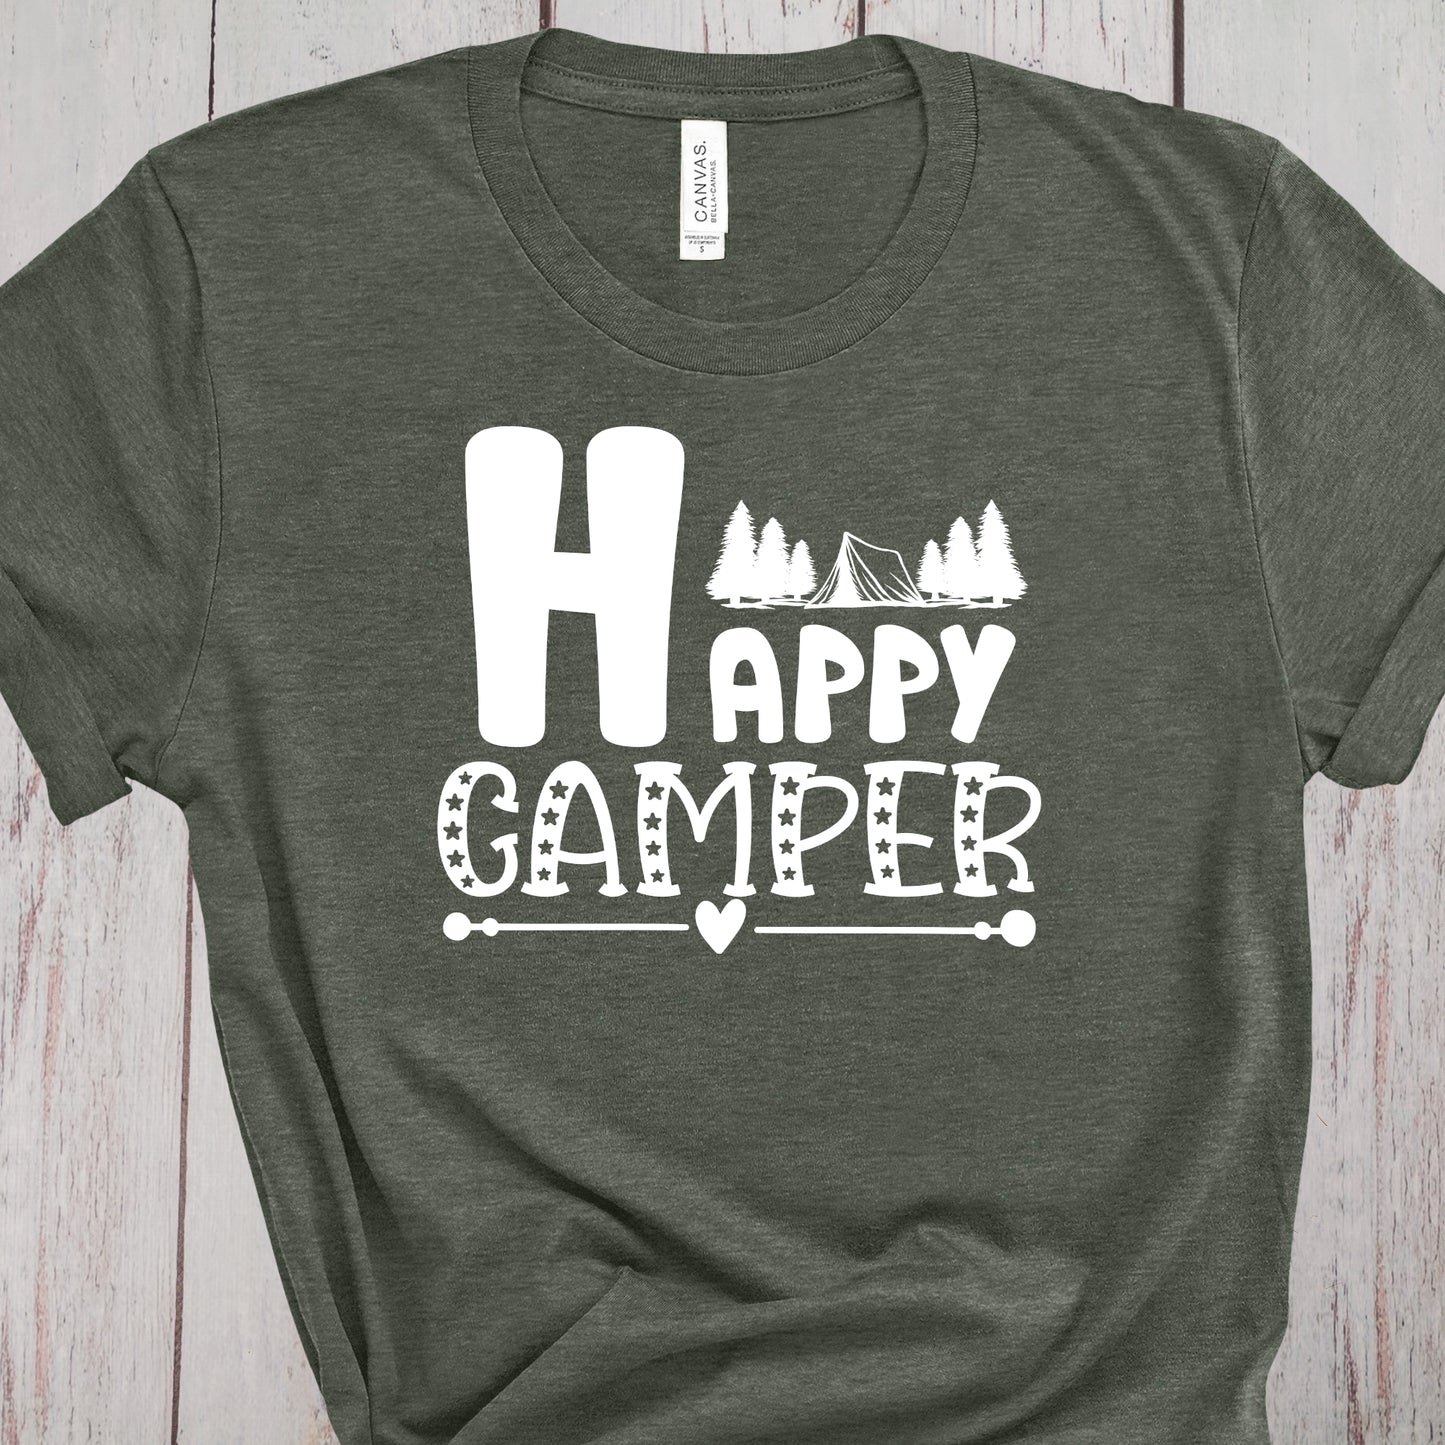 Happy Camper T-shirt, Marshmallow Camper T-shirt, Family T-shirt, Adventure T-shirt, Vacation